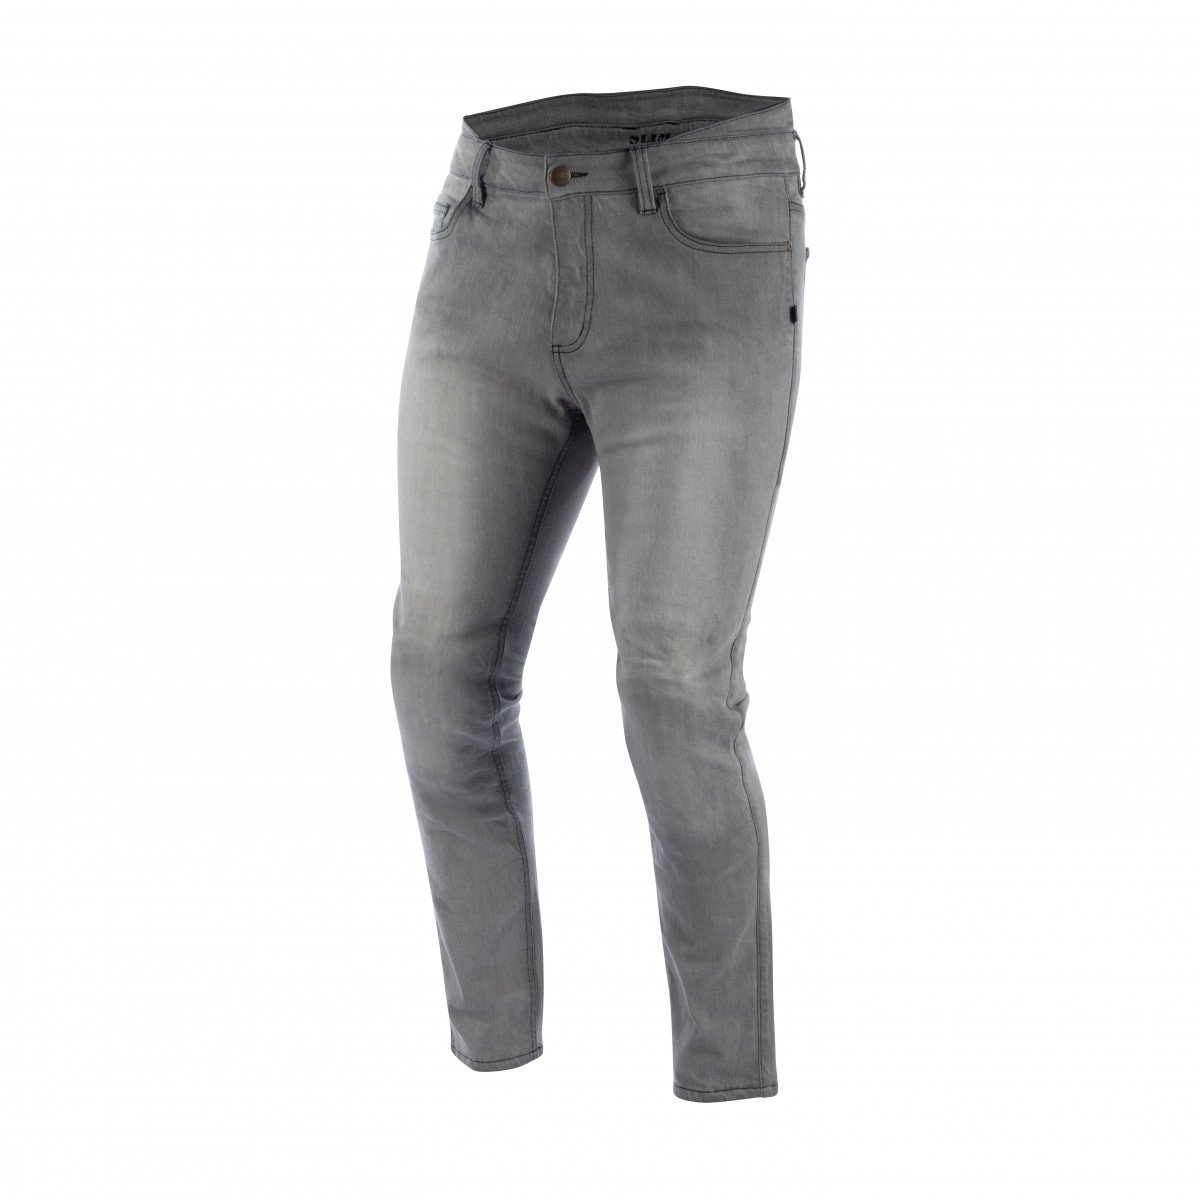 Image of Bering Trousers Twinner Grey Size 3XL ID 3660815168394